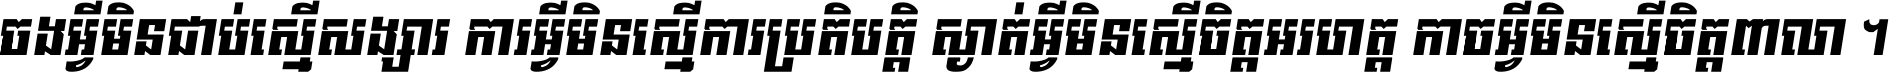 Kh Baphnom 001 First Font Italic